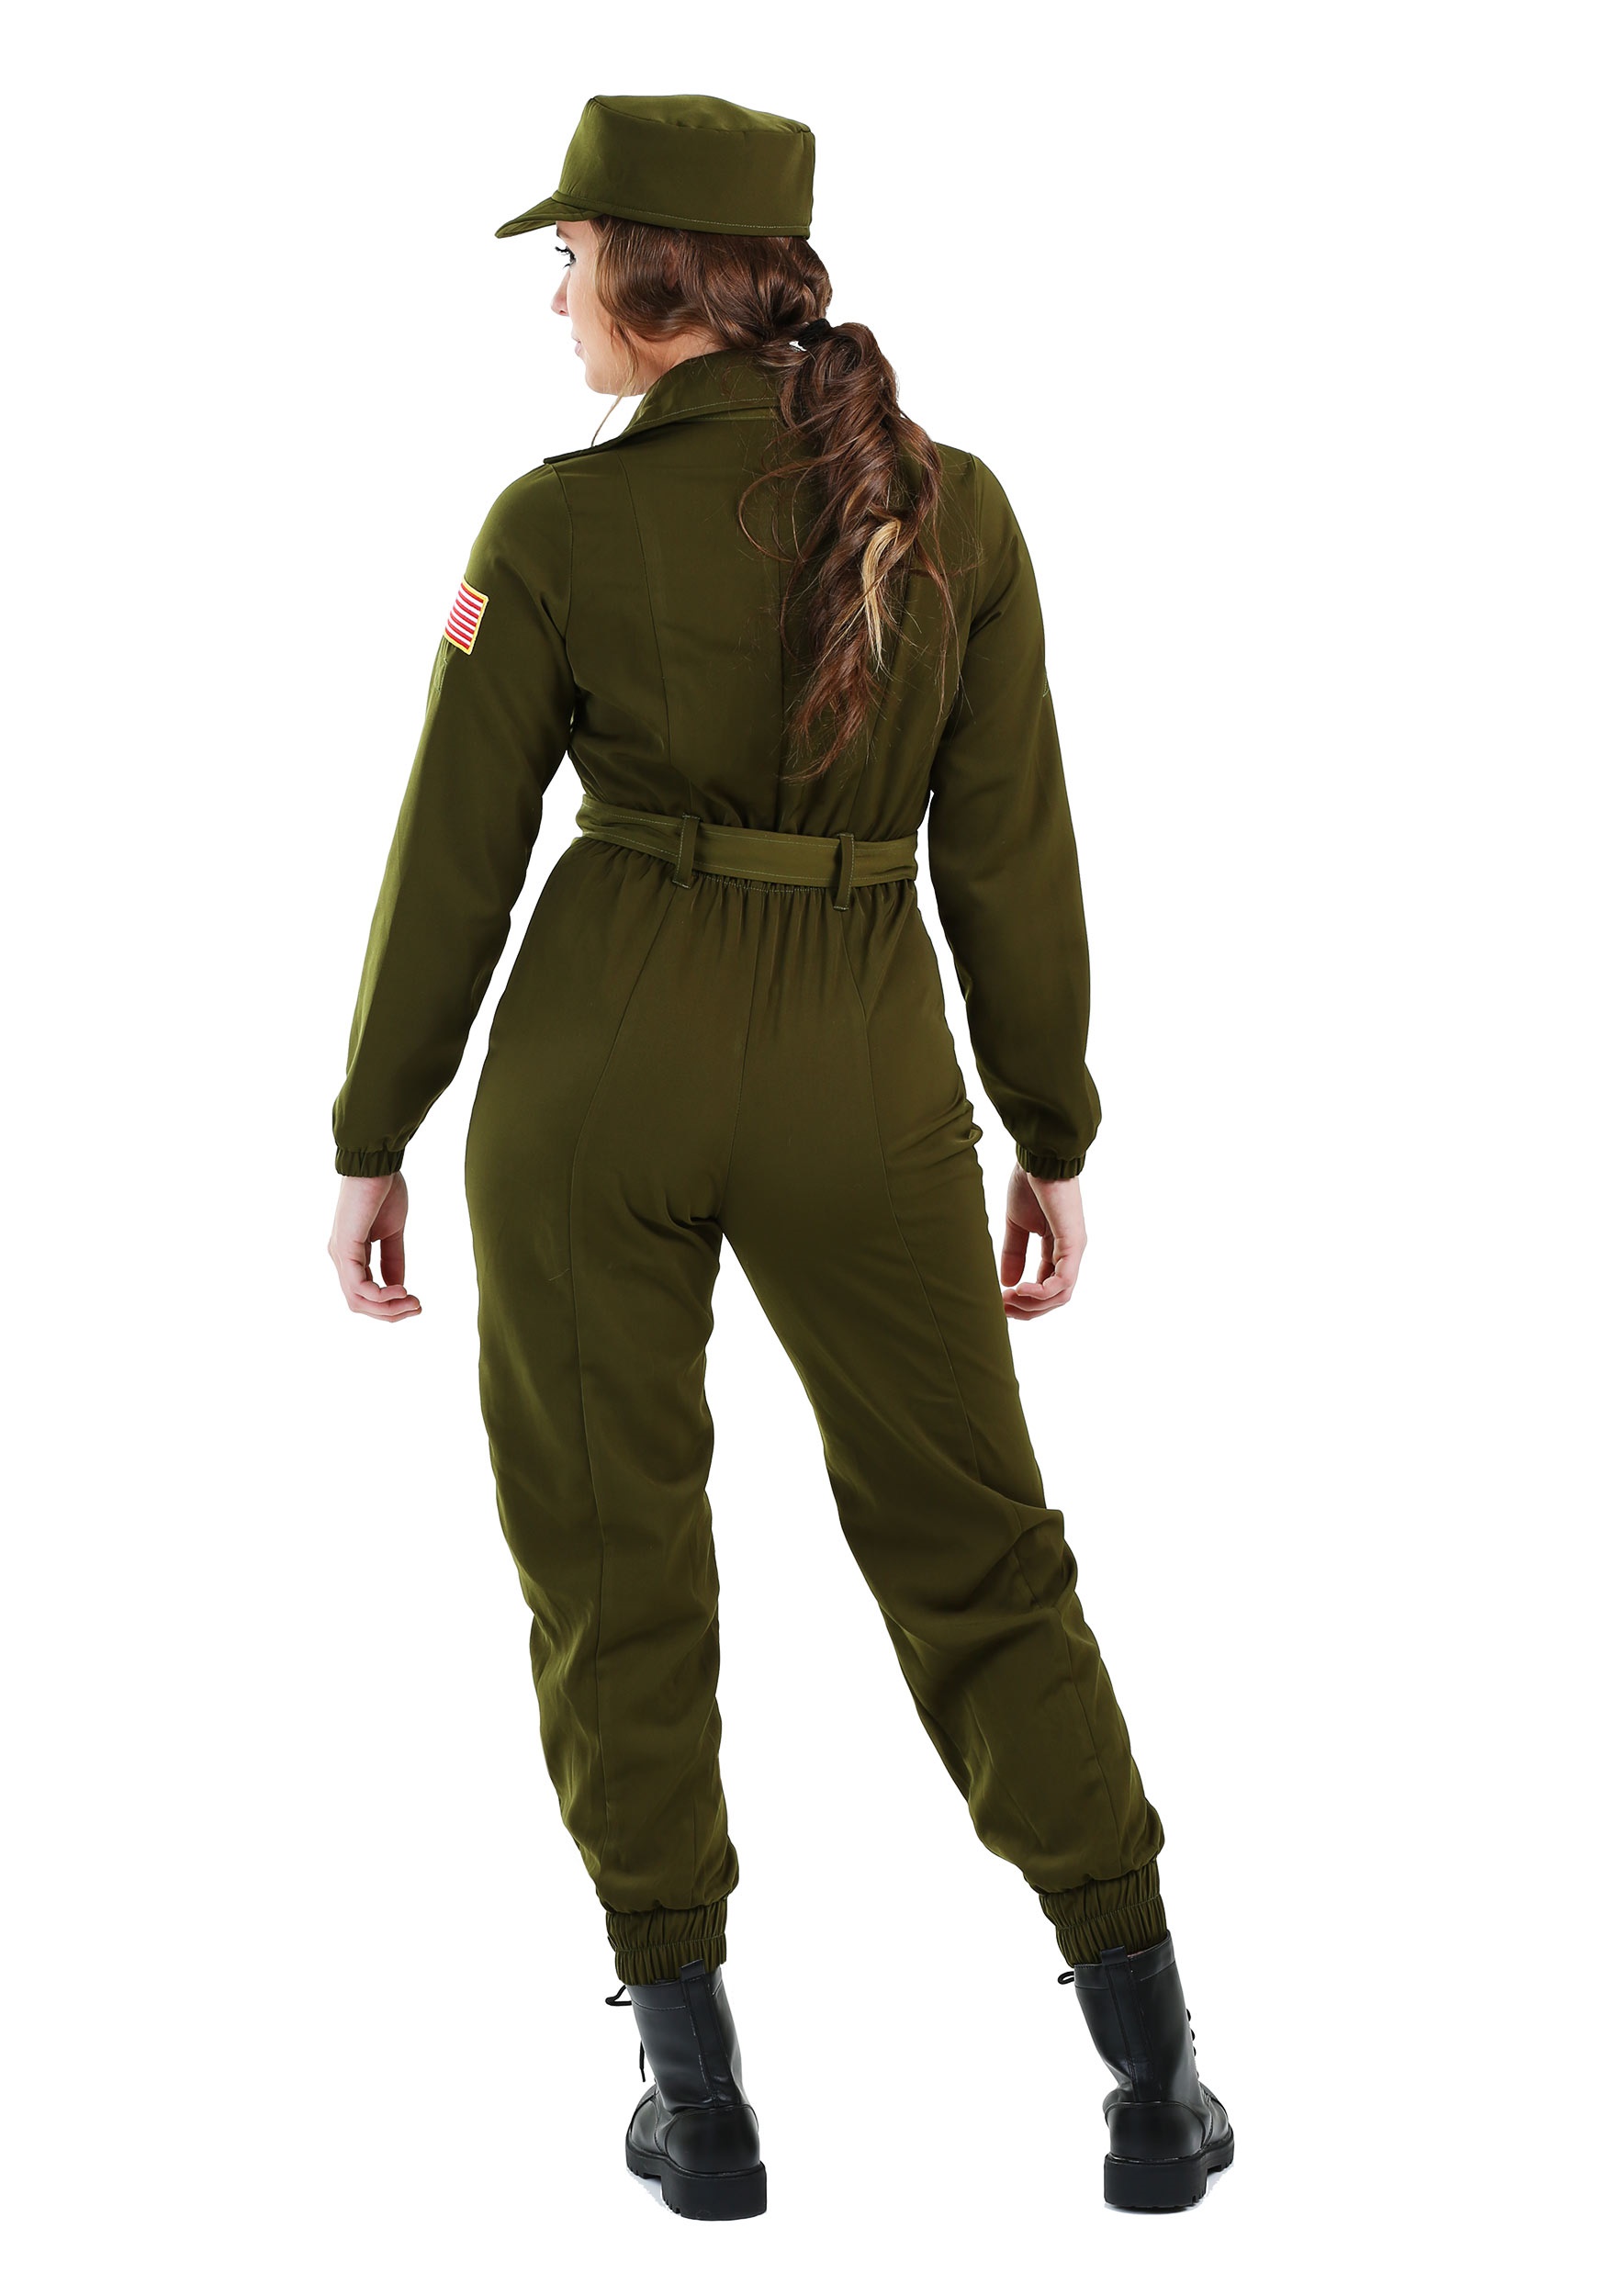 Fun Costumes Women's Army Flightsuit Costume Green X-Small